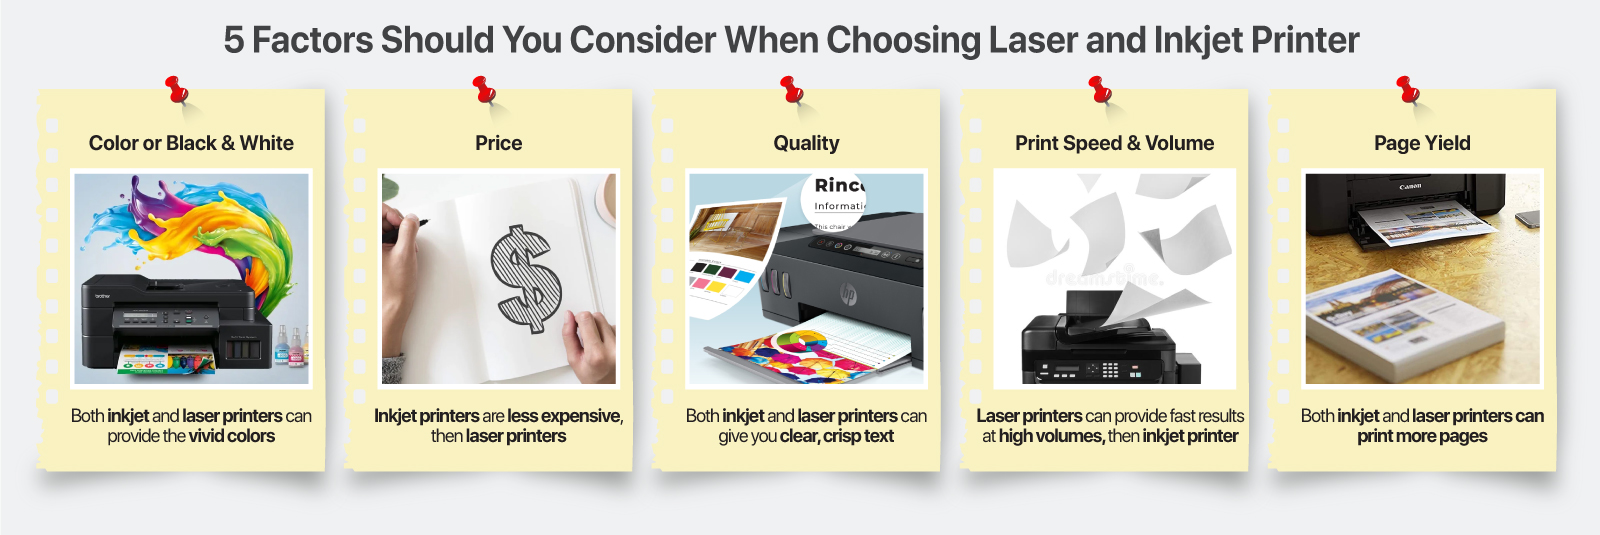 5 Factors Should You Consider When Choosing Laser and Inkjet Printer?